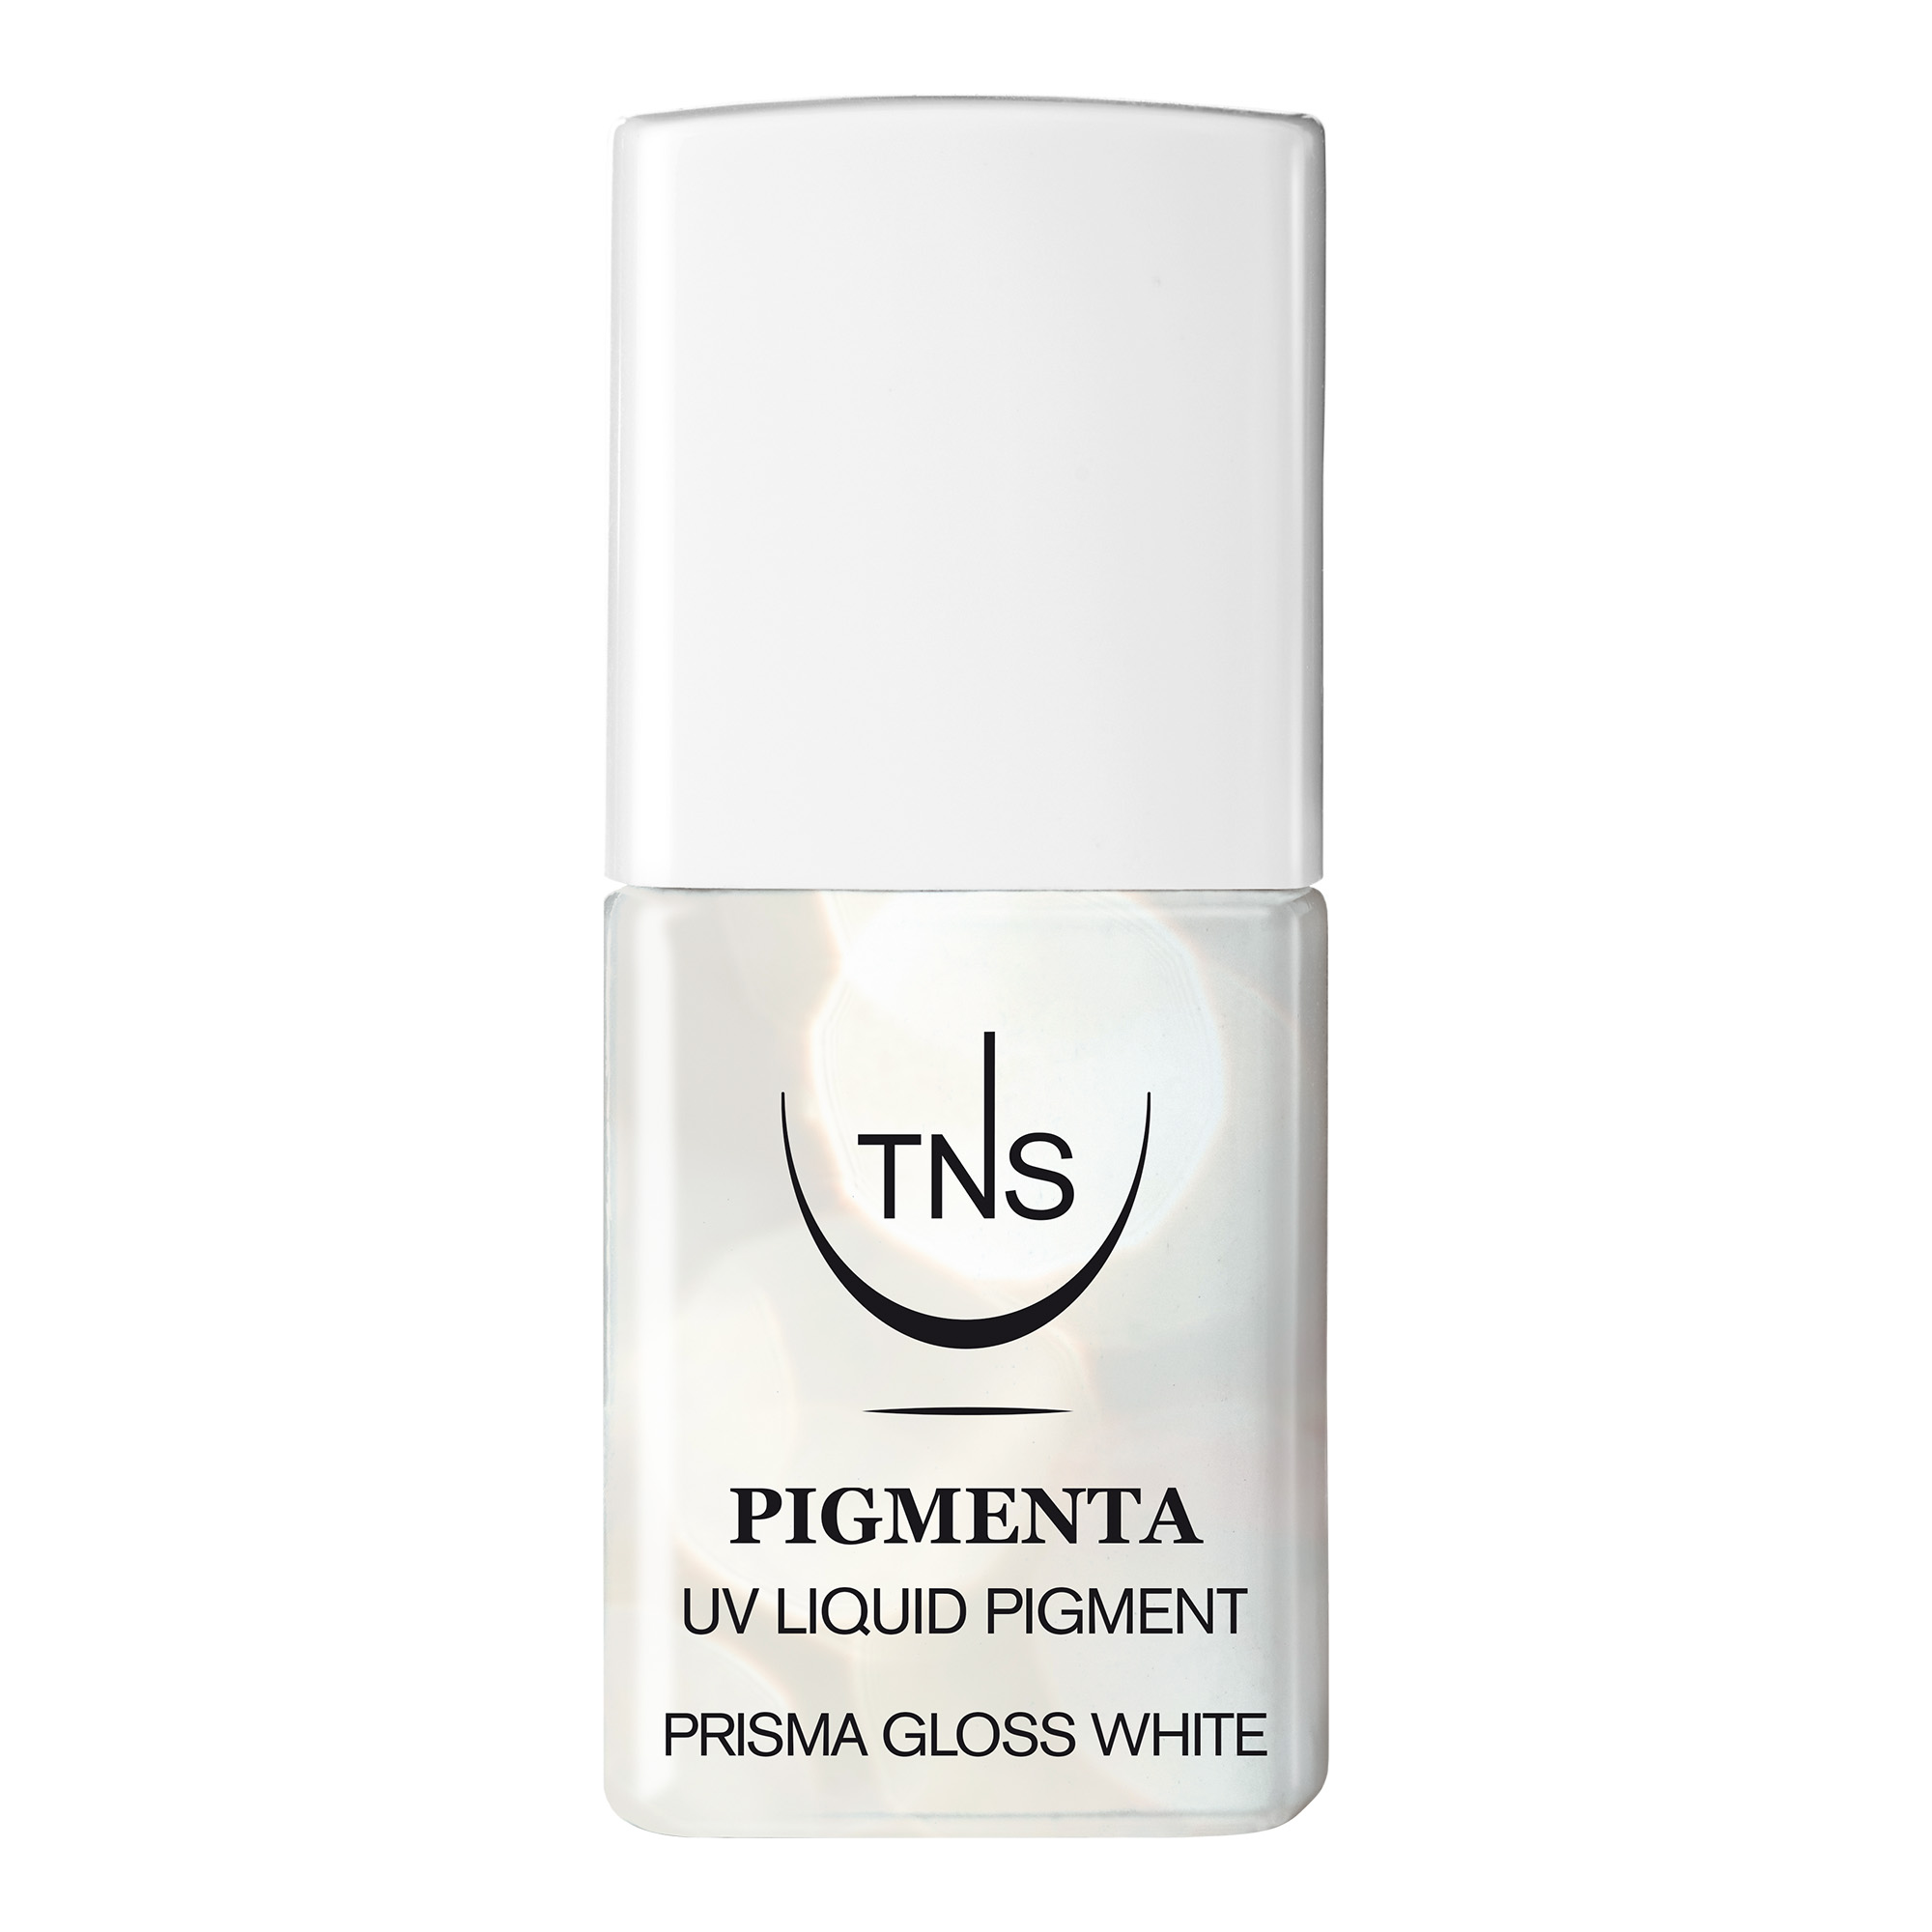 Pigmento Liquido UV Prisma Gloss White bianco iridescente 10 ml Pigmenta TNS